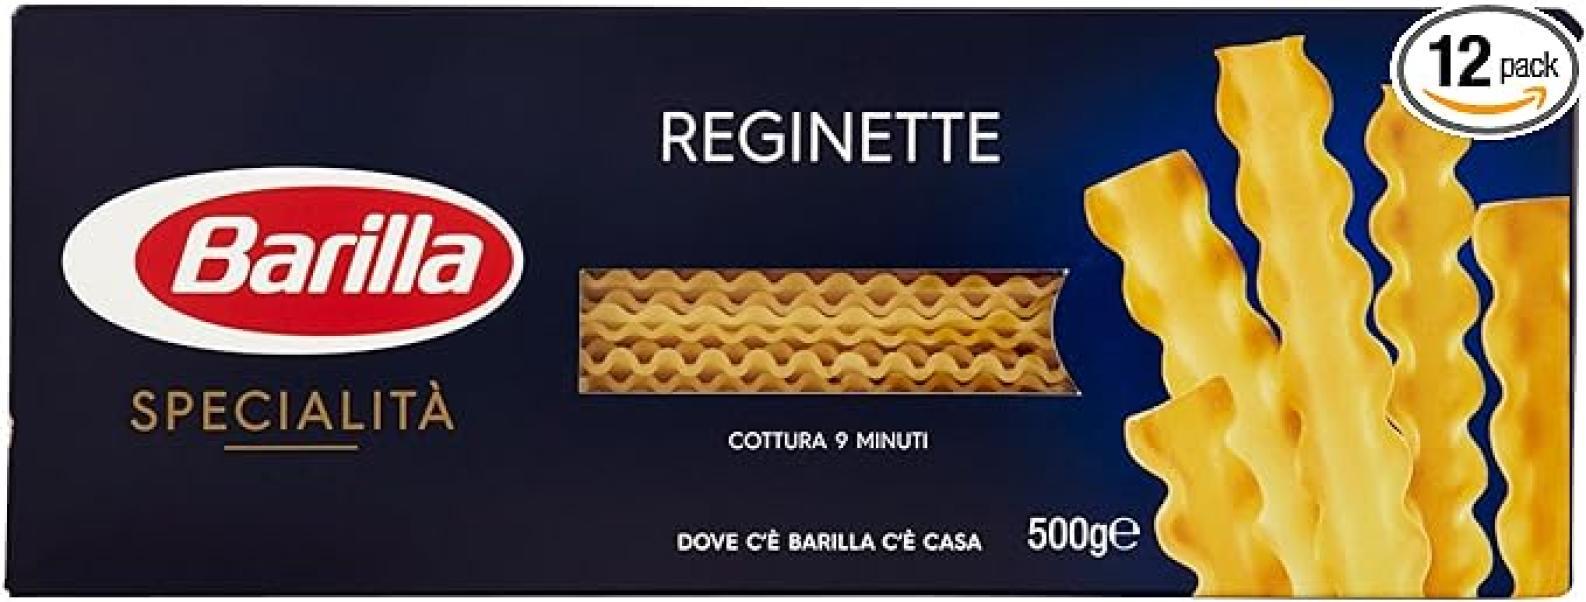 pasta-reginette-napoletane-barilla-500gr-1